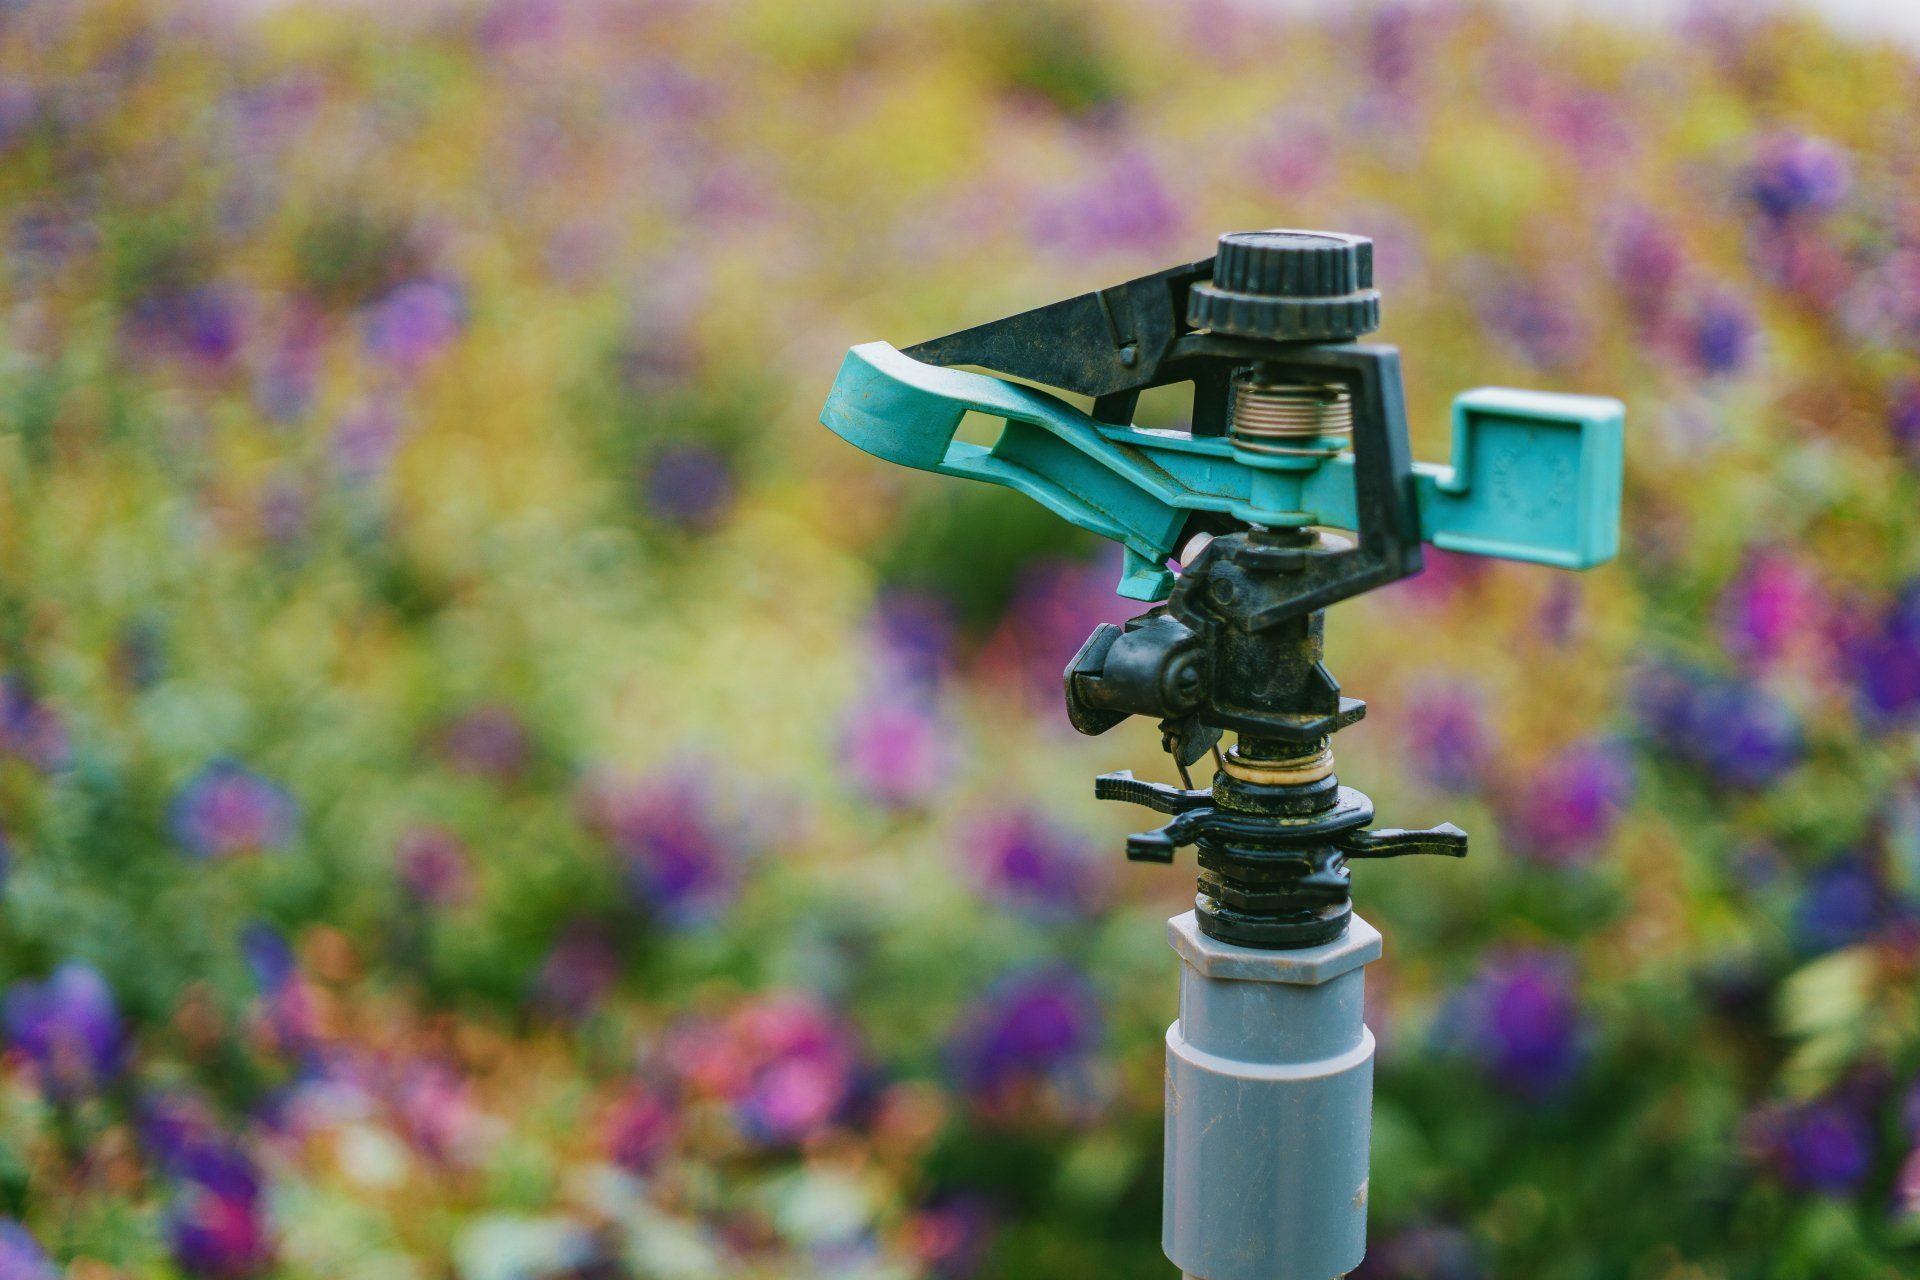 sprinkler system is used to irrigate